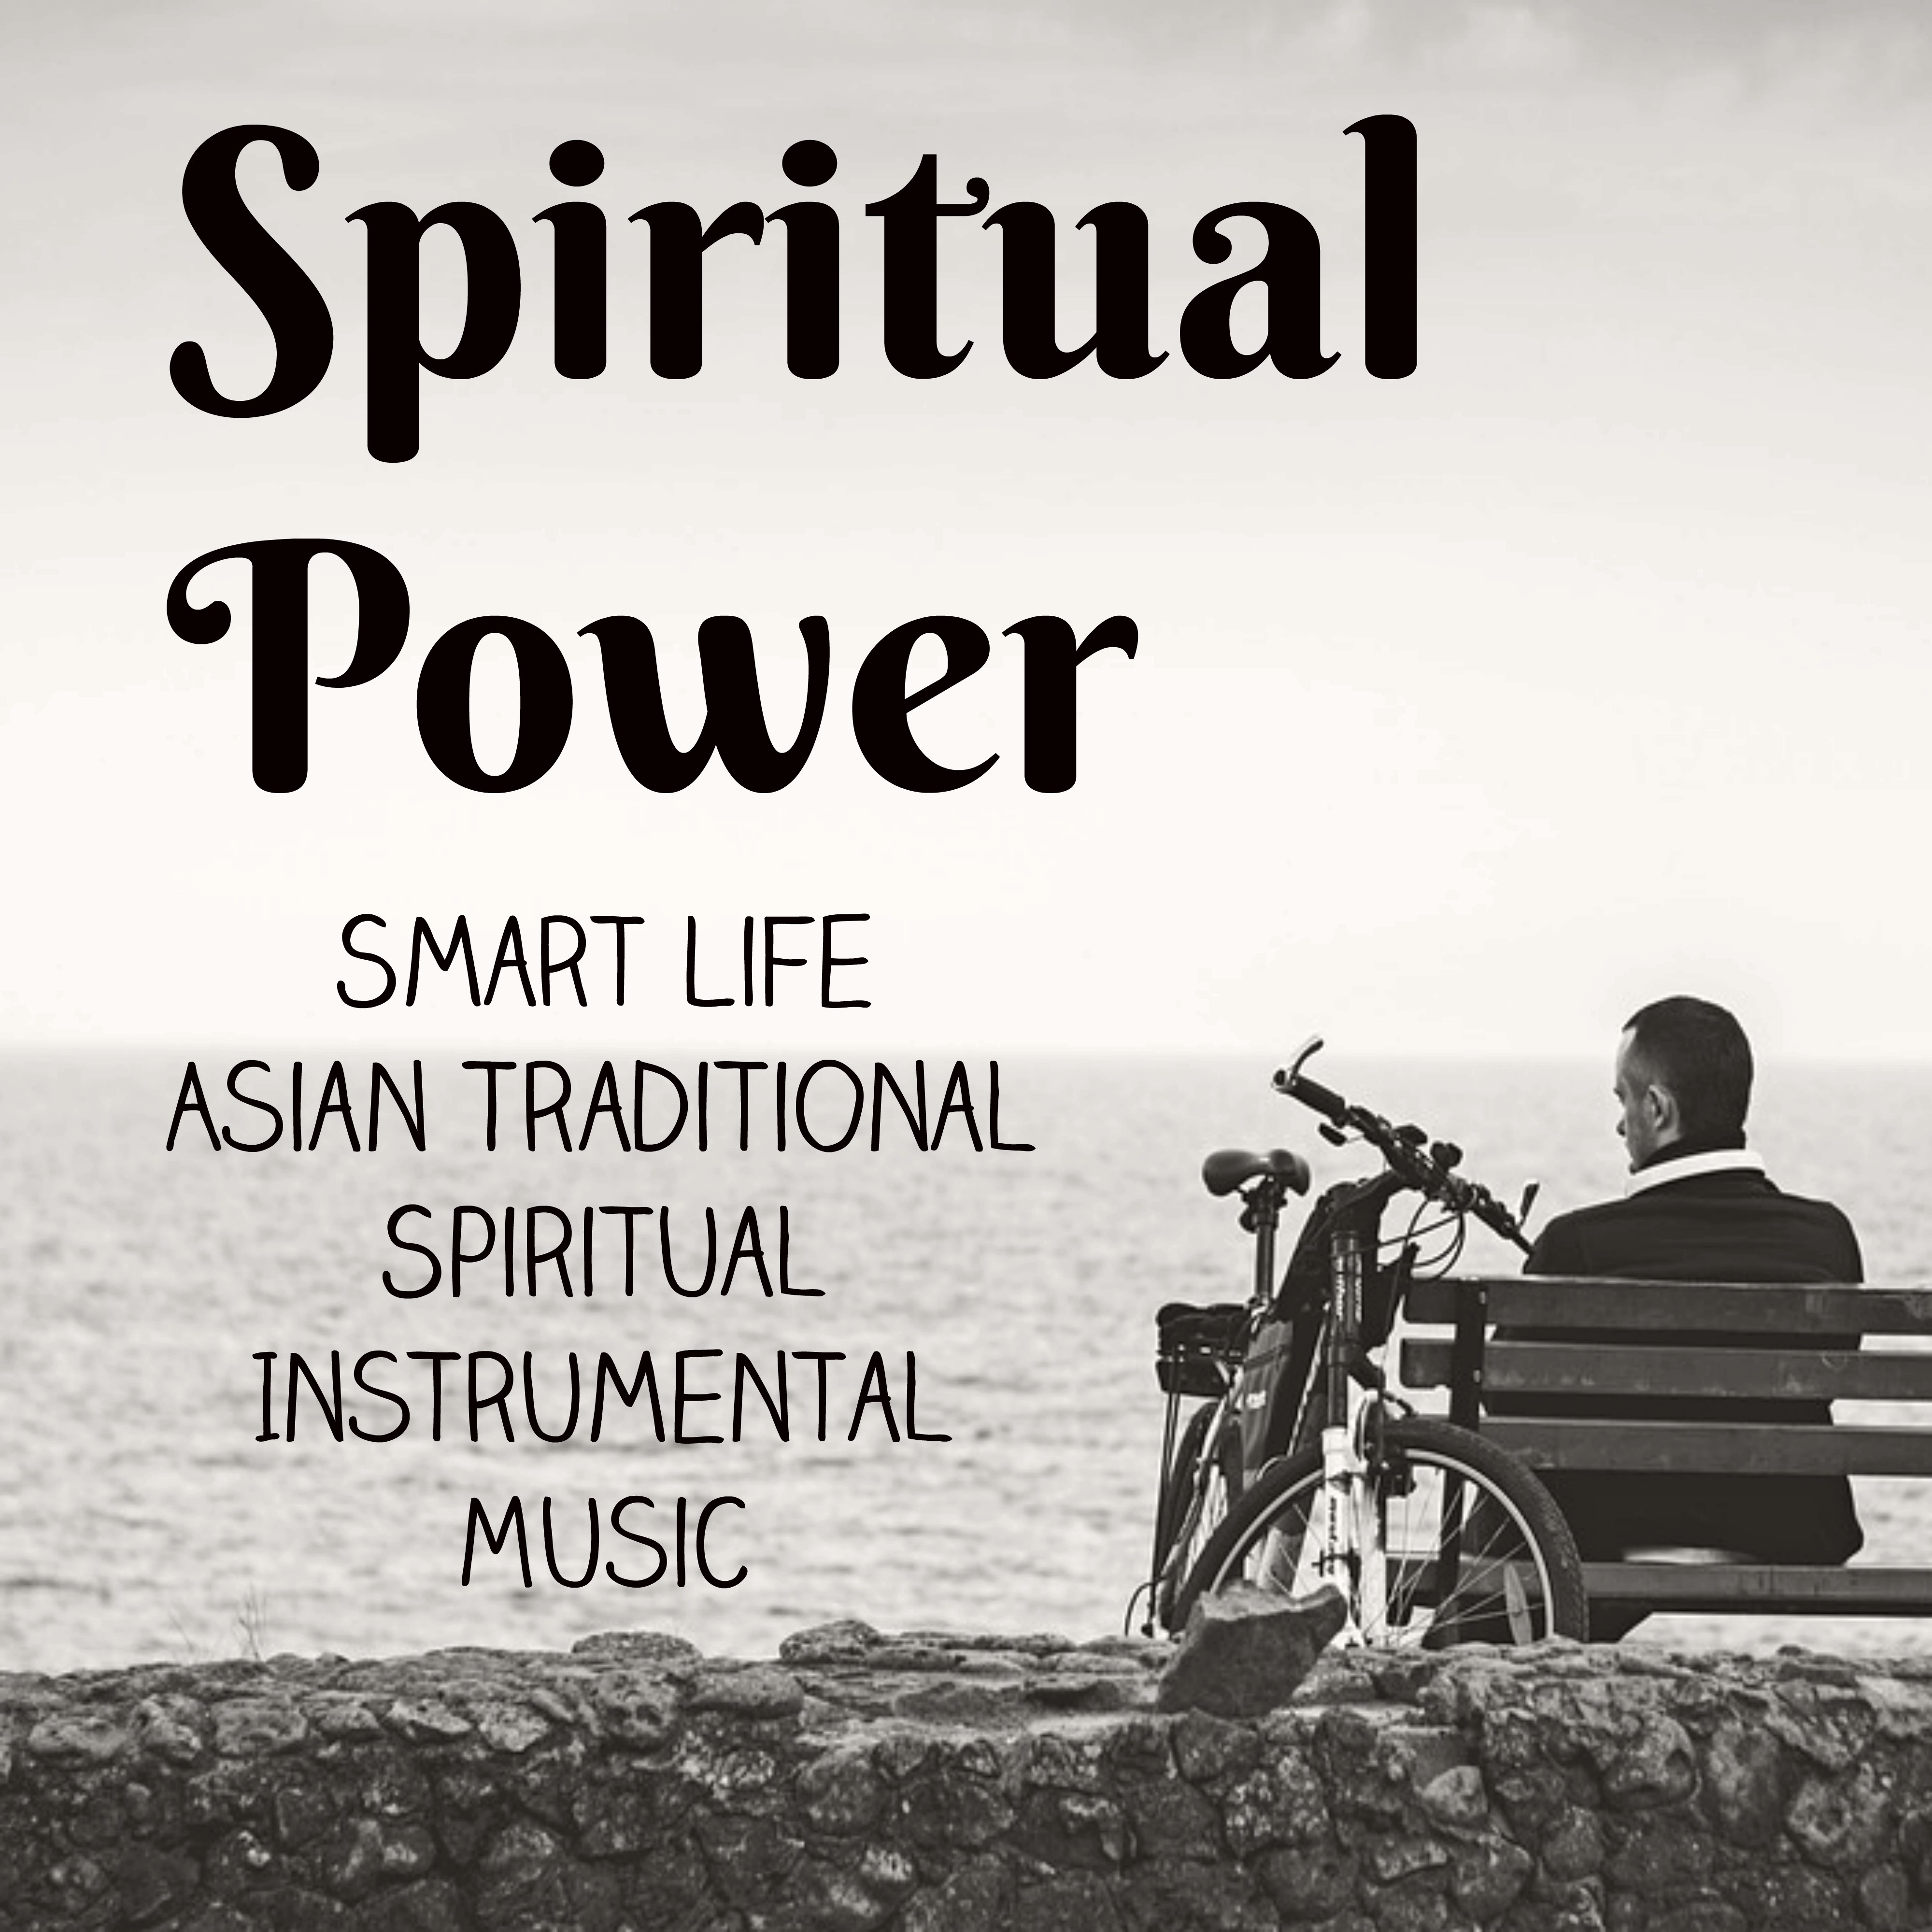 Spiritual Power - Smart Life Asian Traditional Spiritual Instrumental Music for Wellness Day  Health Retreat and Body Language